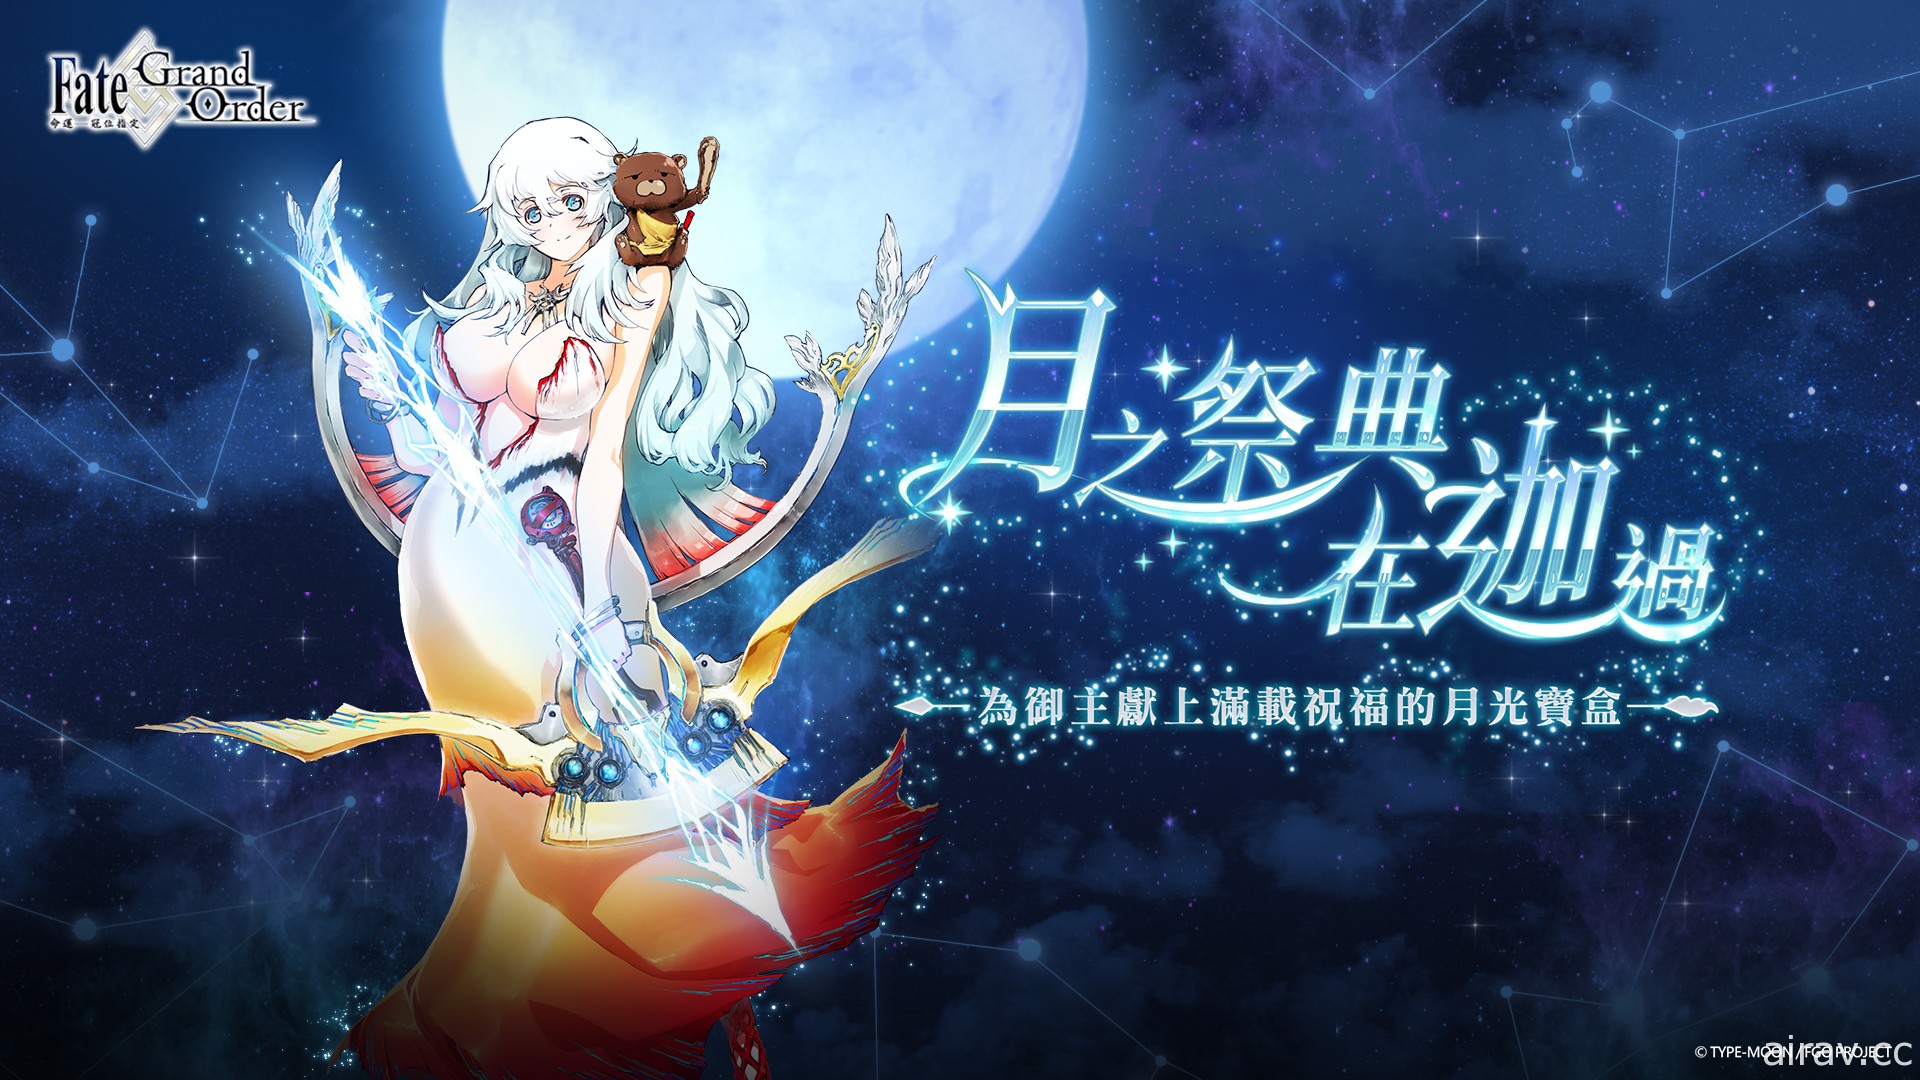 《Fate/Grand Order》繁中版将于 9 月 21 日举办迦勒底中秋节纪念活动